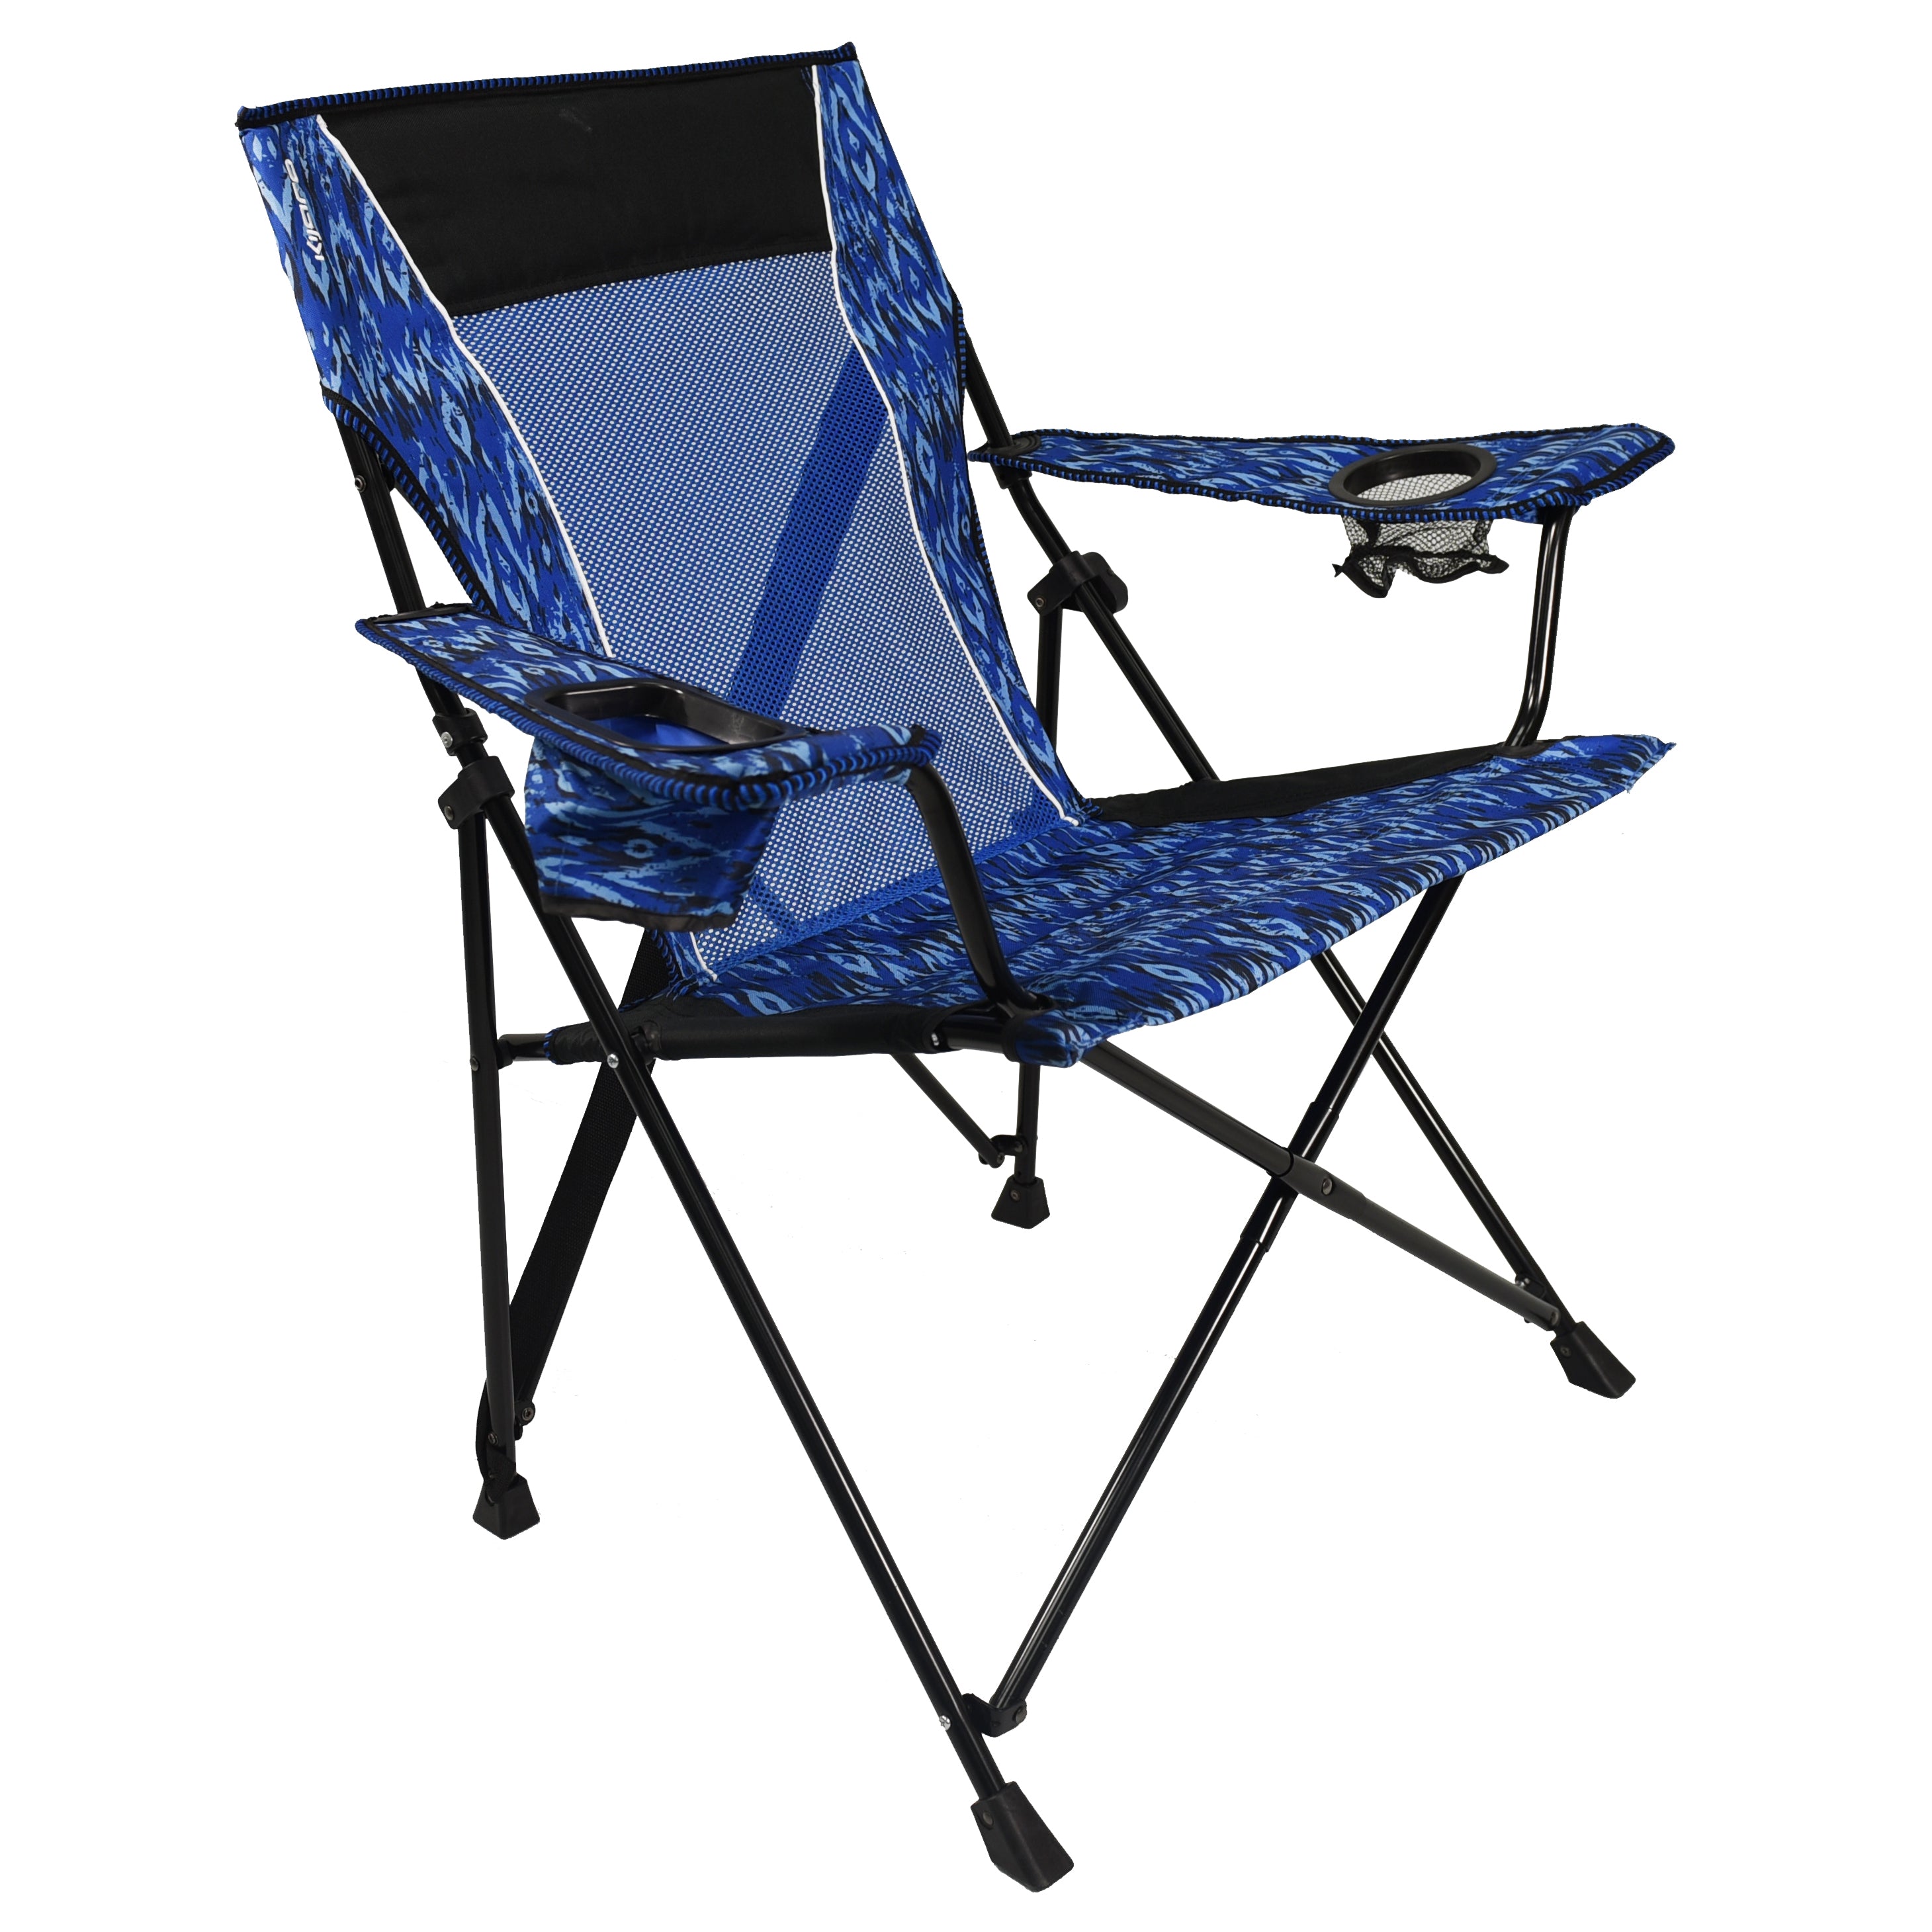 Dual Lock® Destination Print Chair - 300 lb Weight Capacity